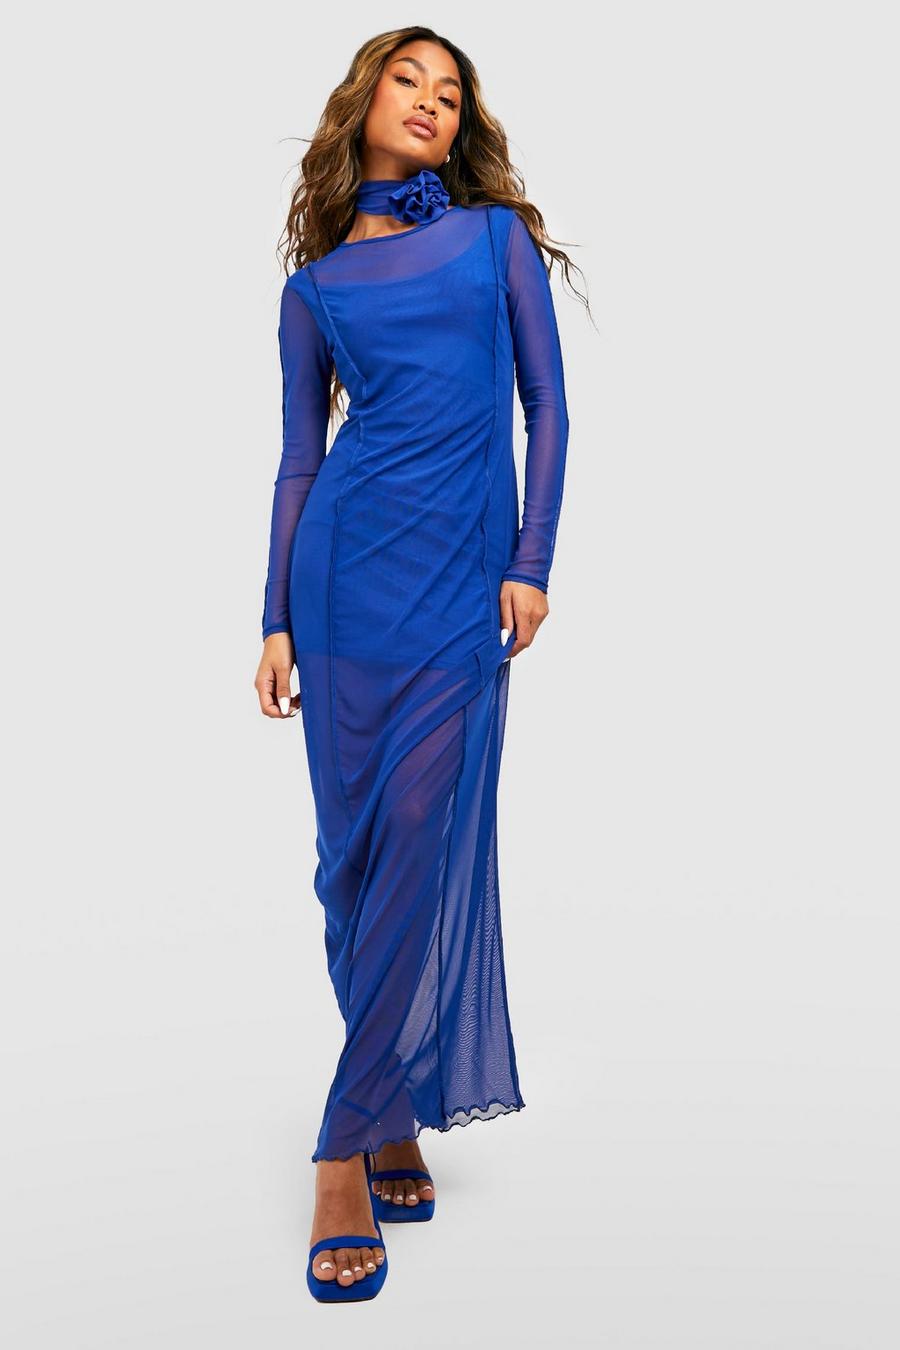 Mesh Seam Detail 2 In 1 Maxi Dress, Cobalt azzurro